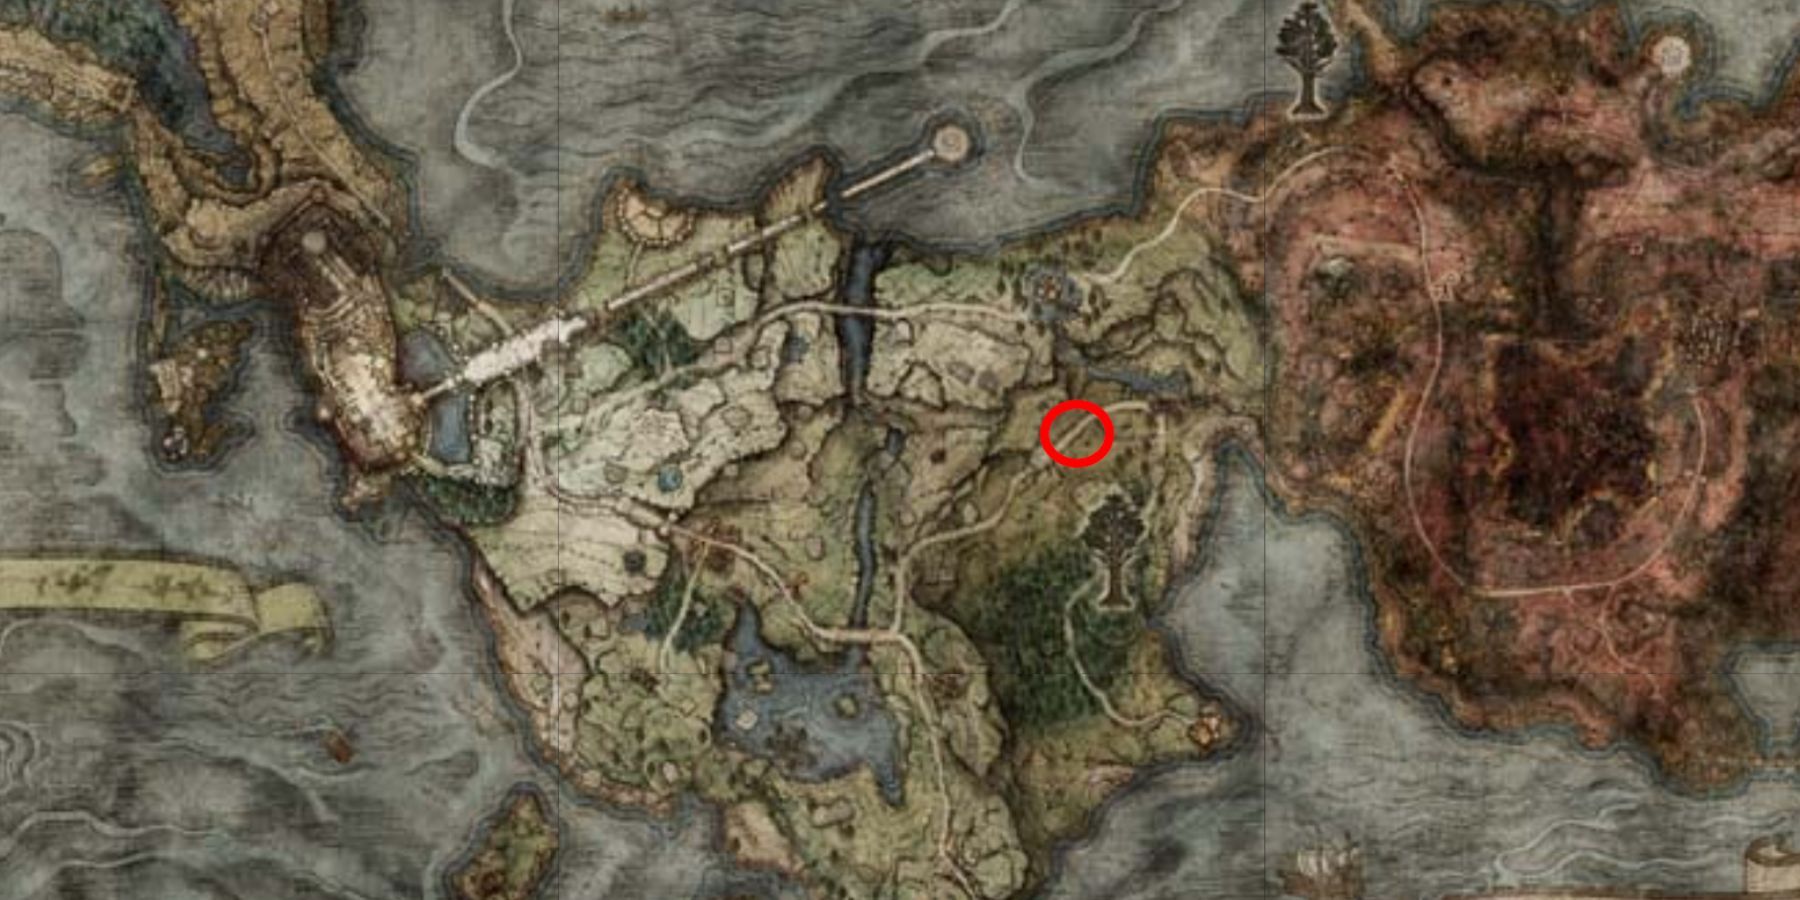 Fevor's Cookbook [1] location on the map in Elden Ring